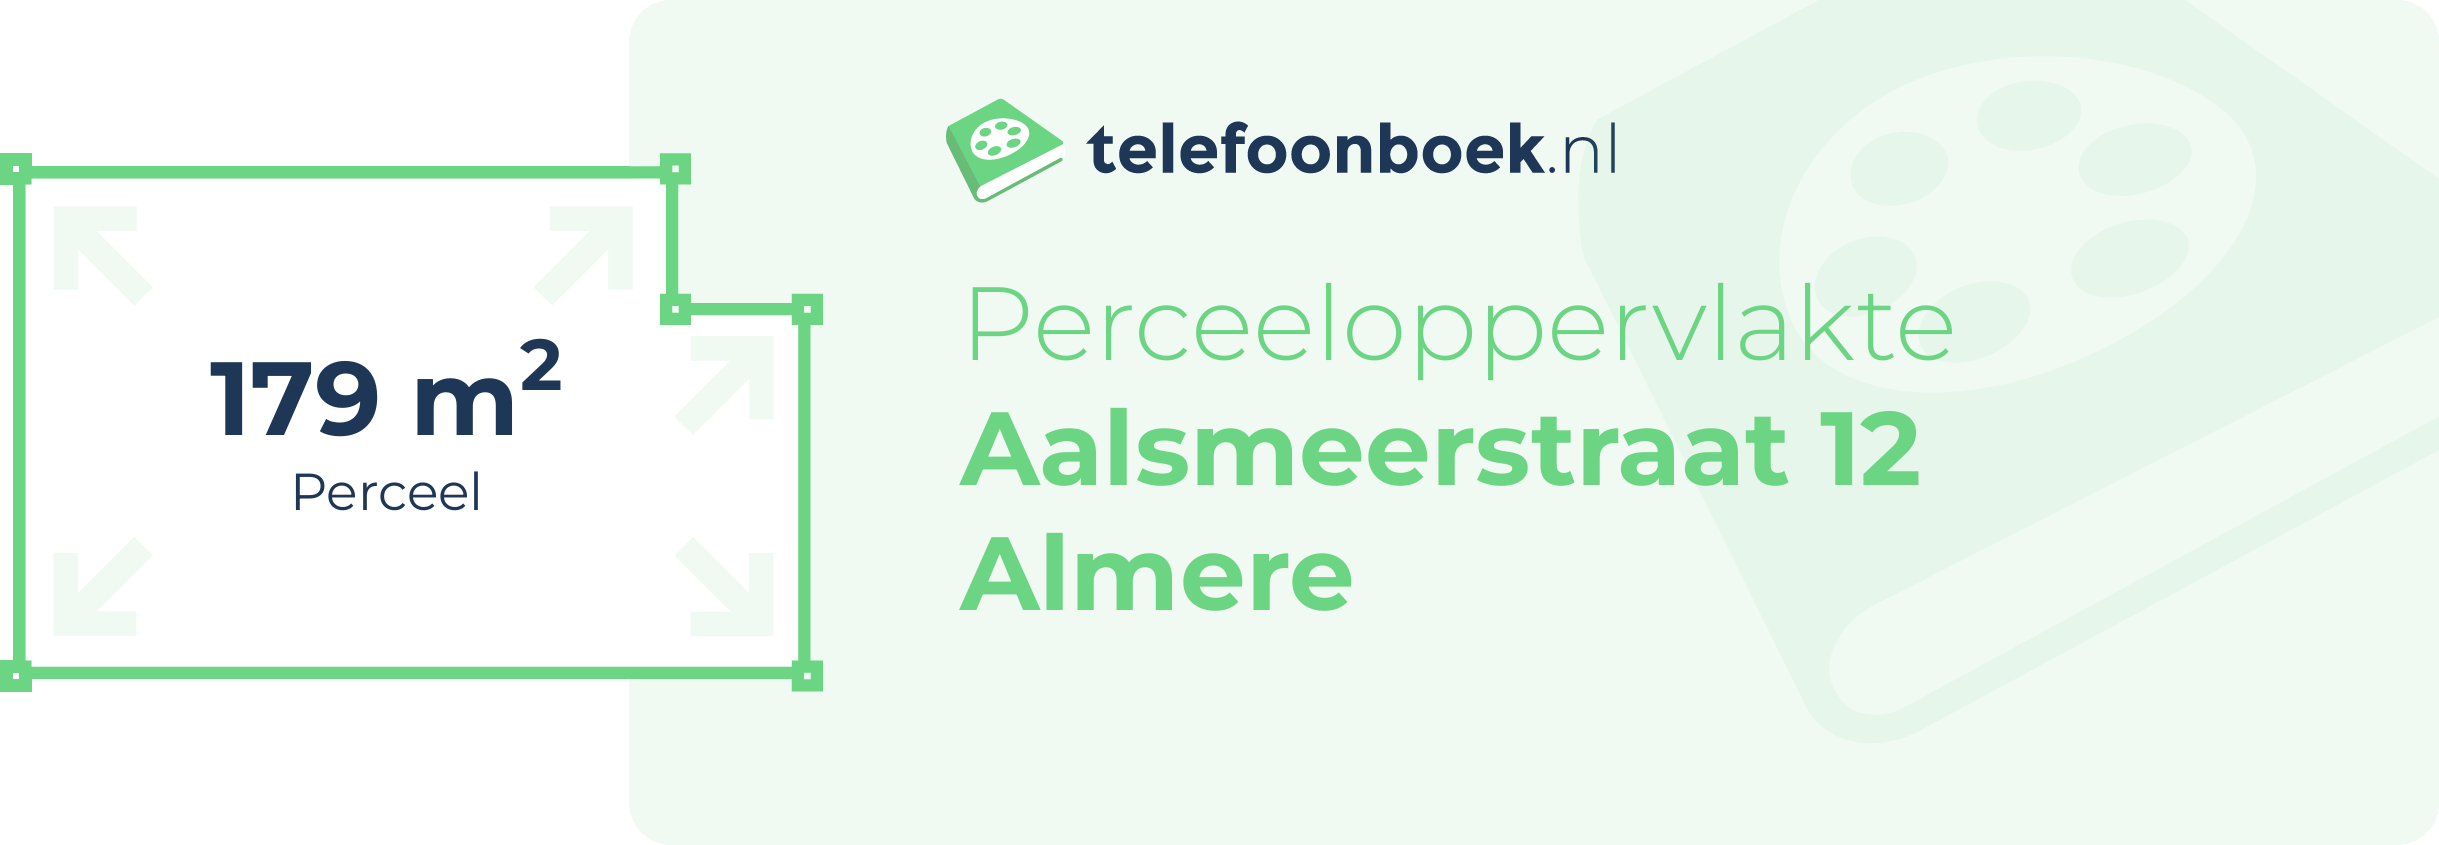 Perceeloppervlakte Aalsmeerstraat 12 Almere